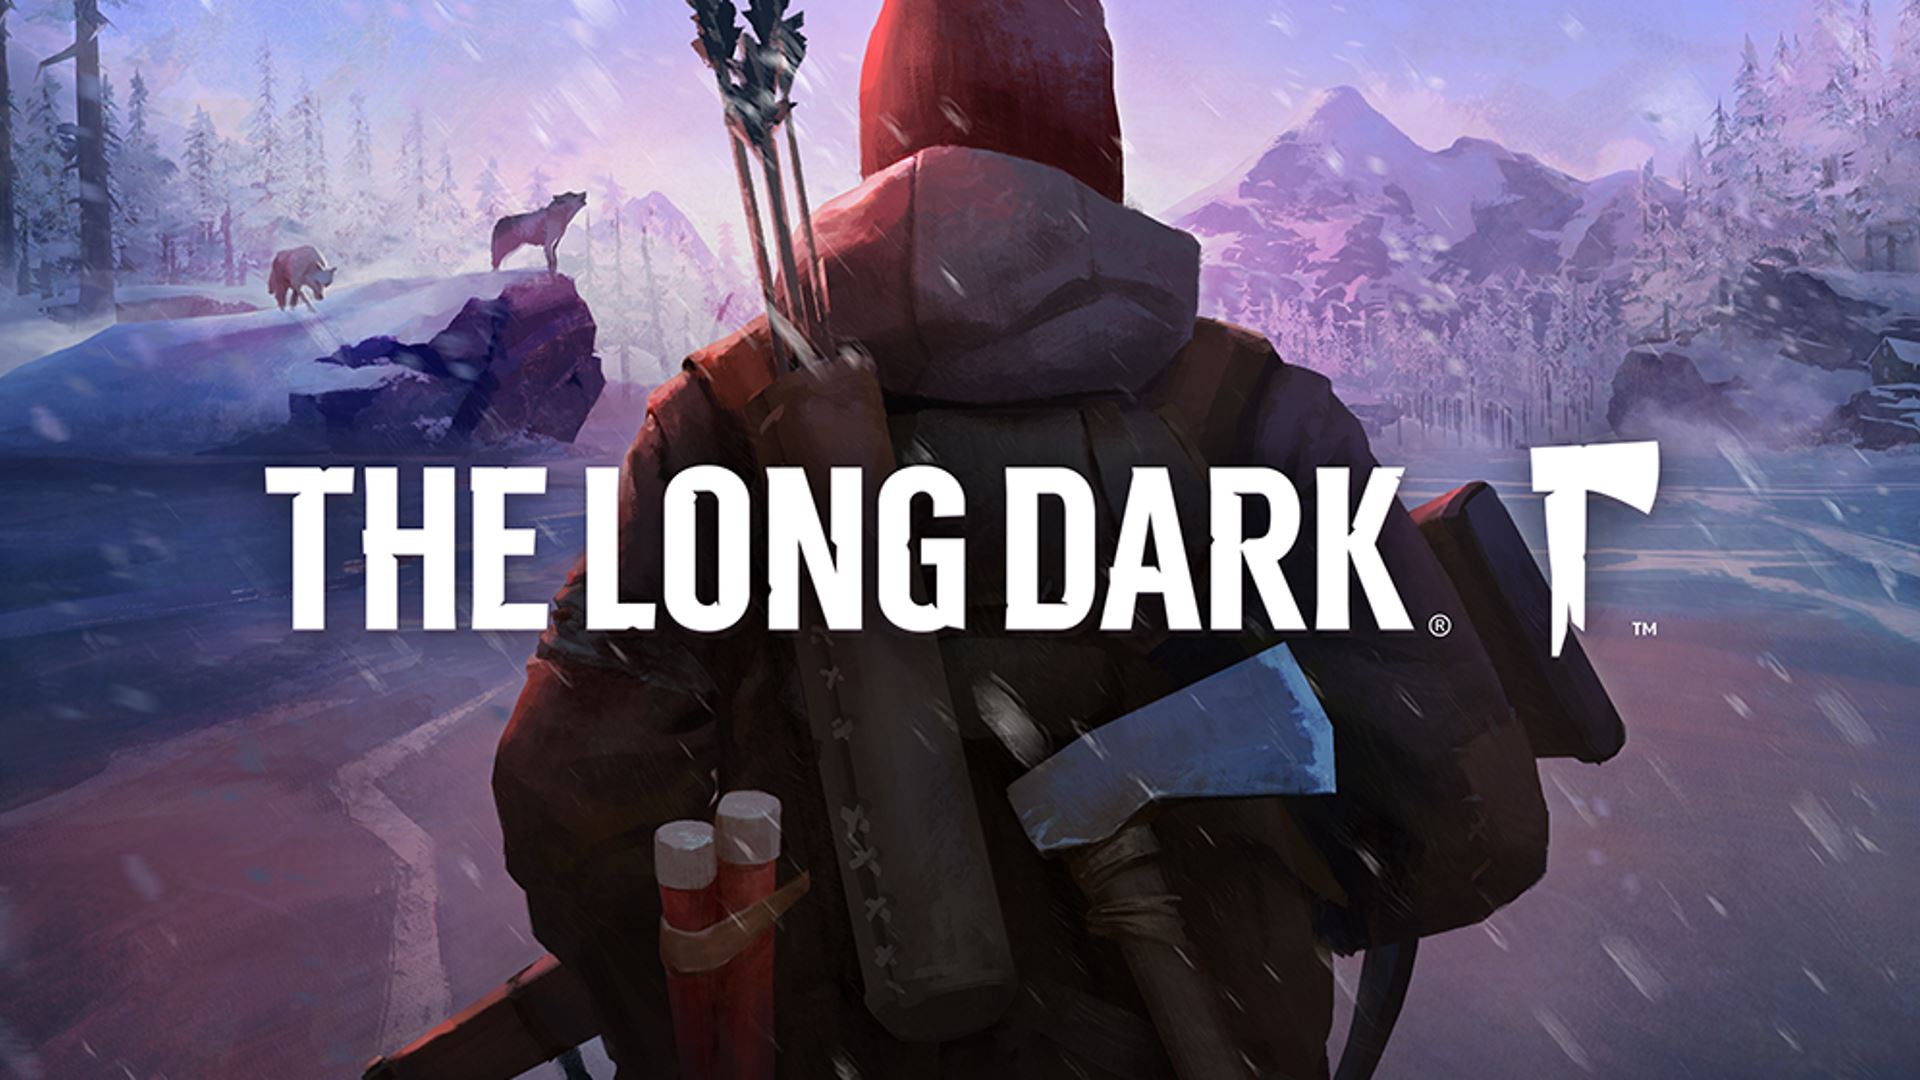 The Long Dark V1 94 Gog Game Pc Full Free Download Pc Games Crack Direct Link